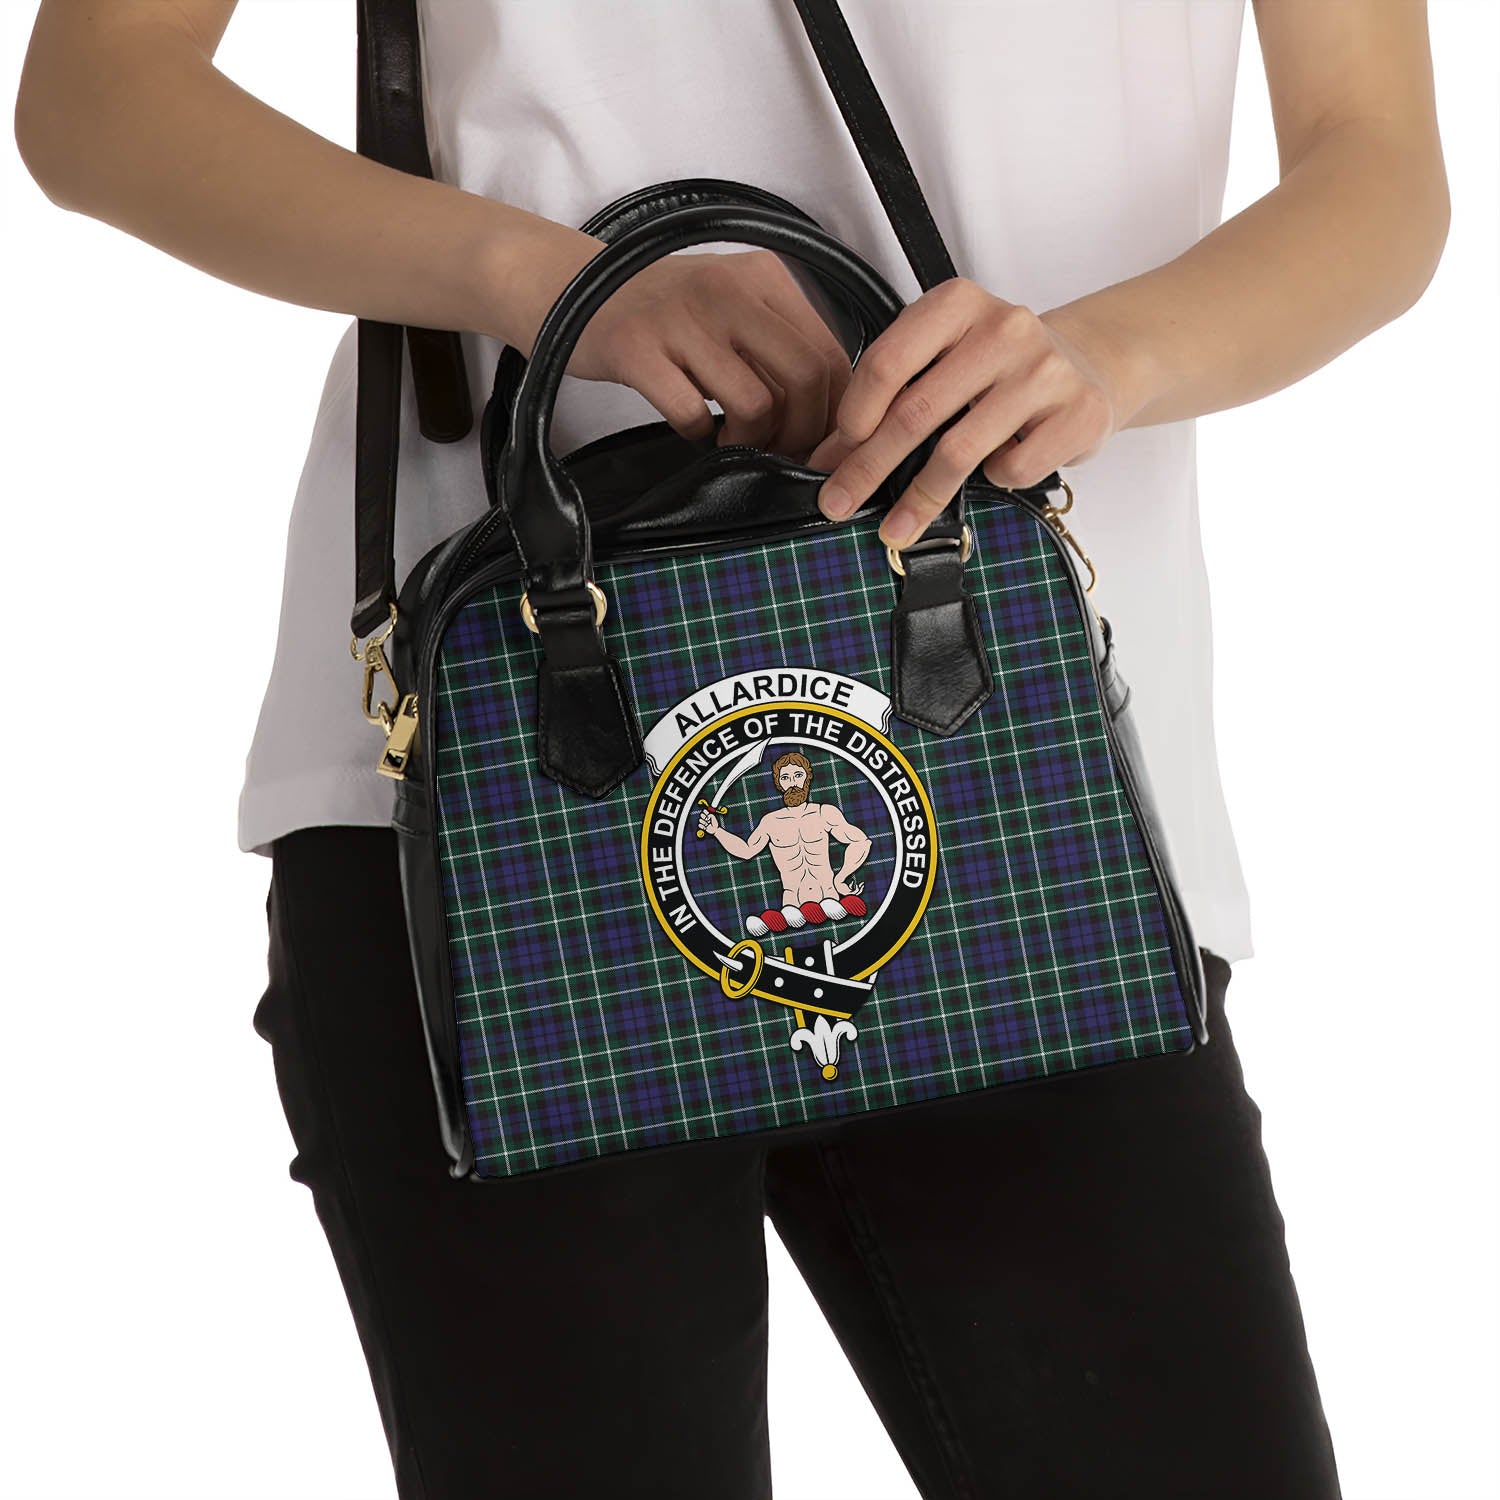 Allardice Tartan Shoulder Handbags with Family Crest - Tartanvibesclothing